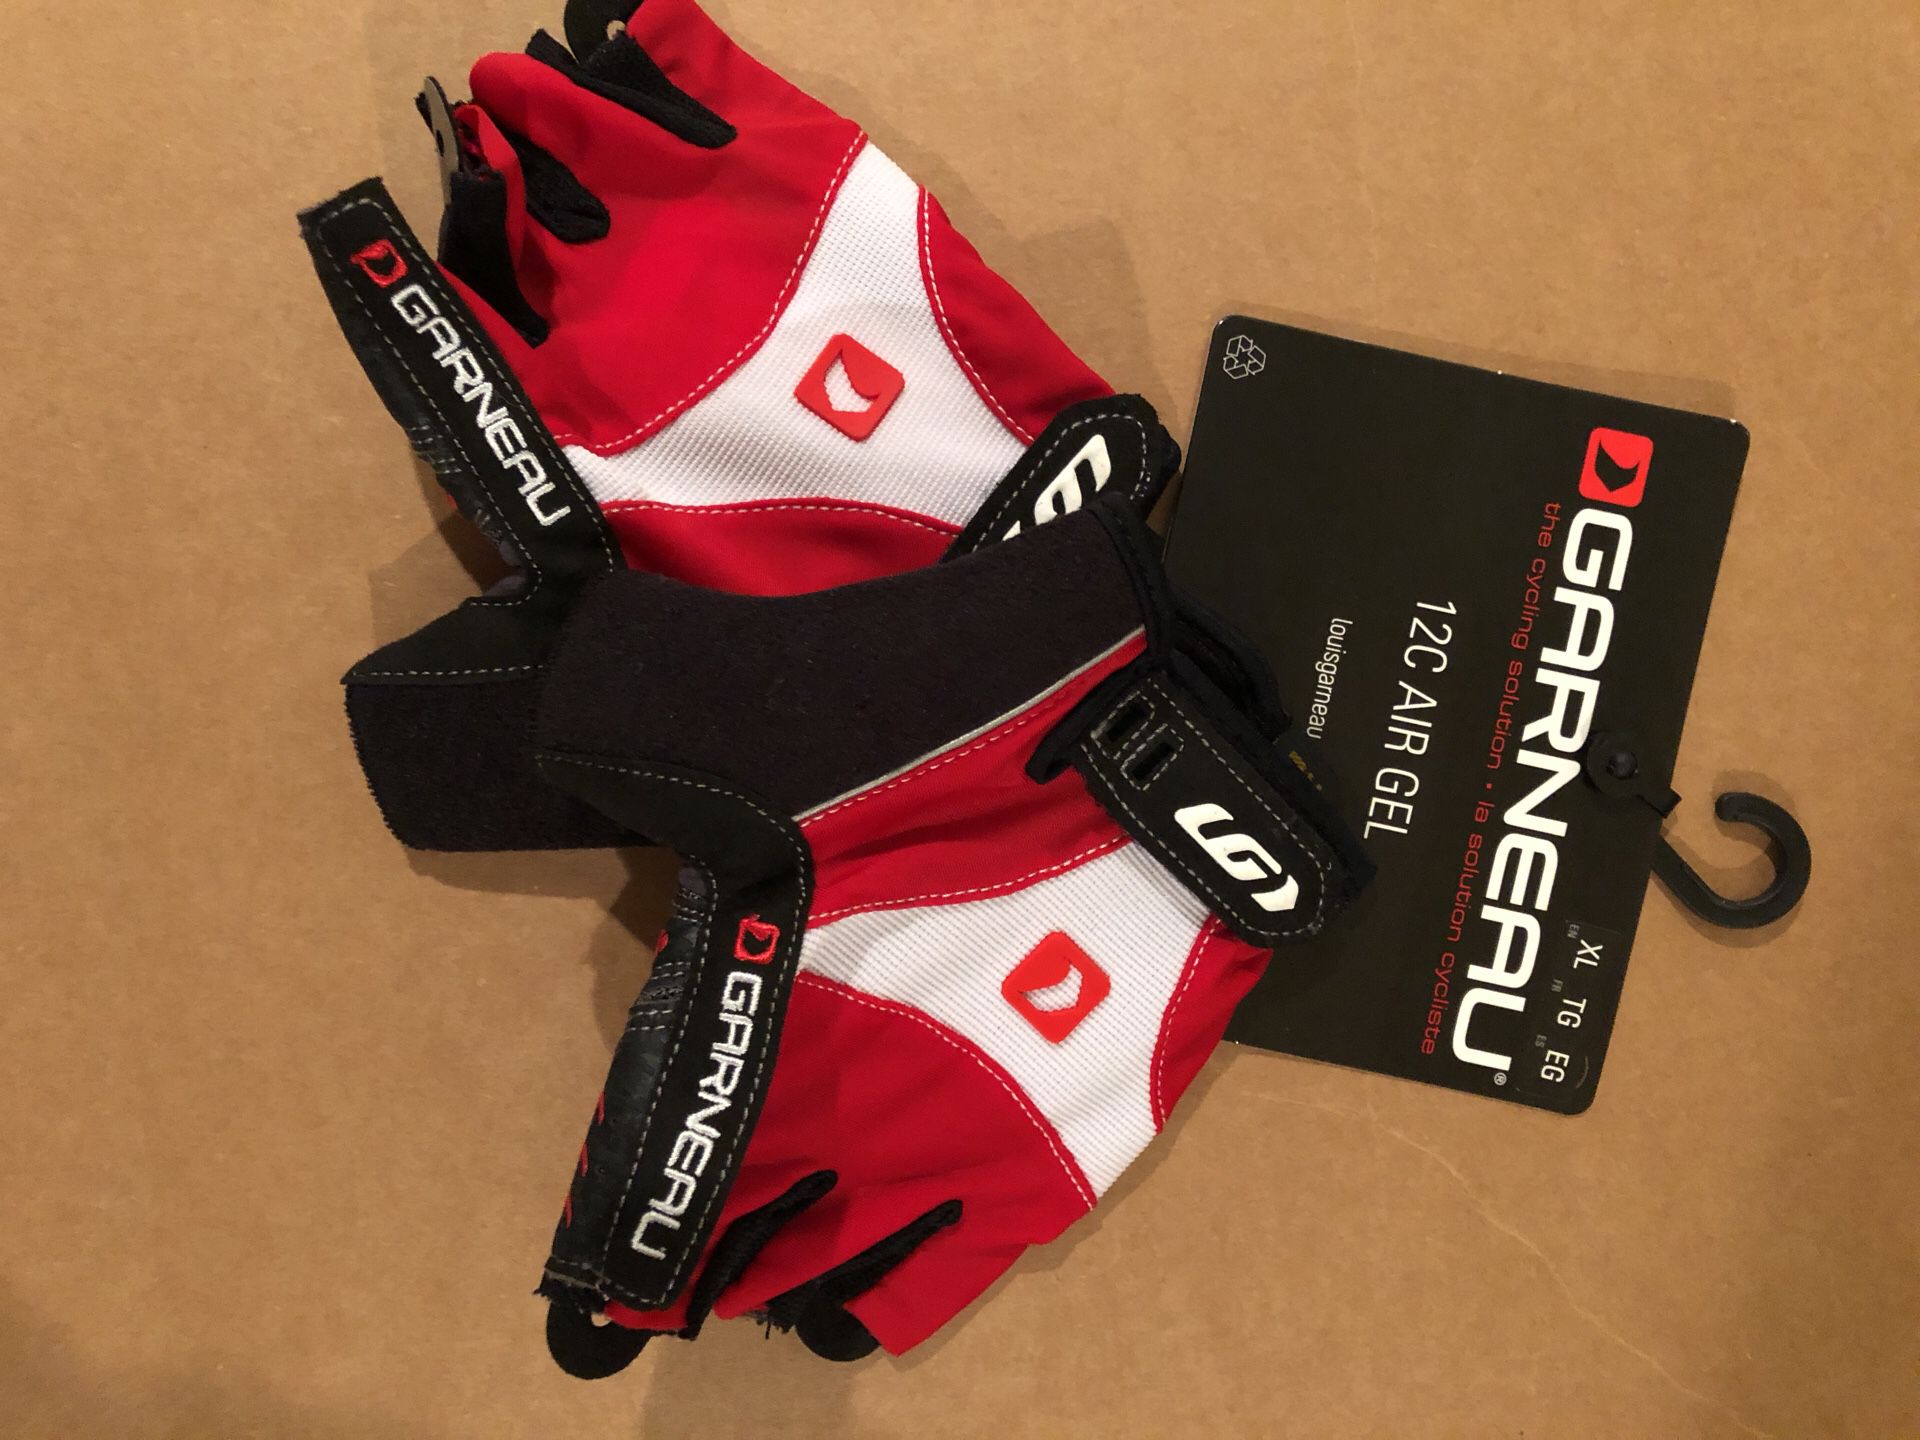 Garneau Red XL bike cycle gloves